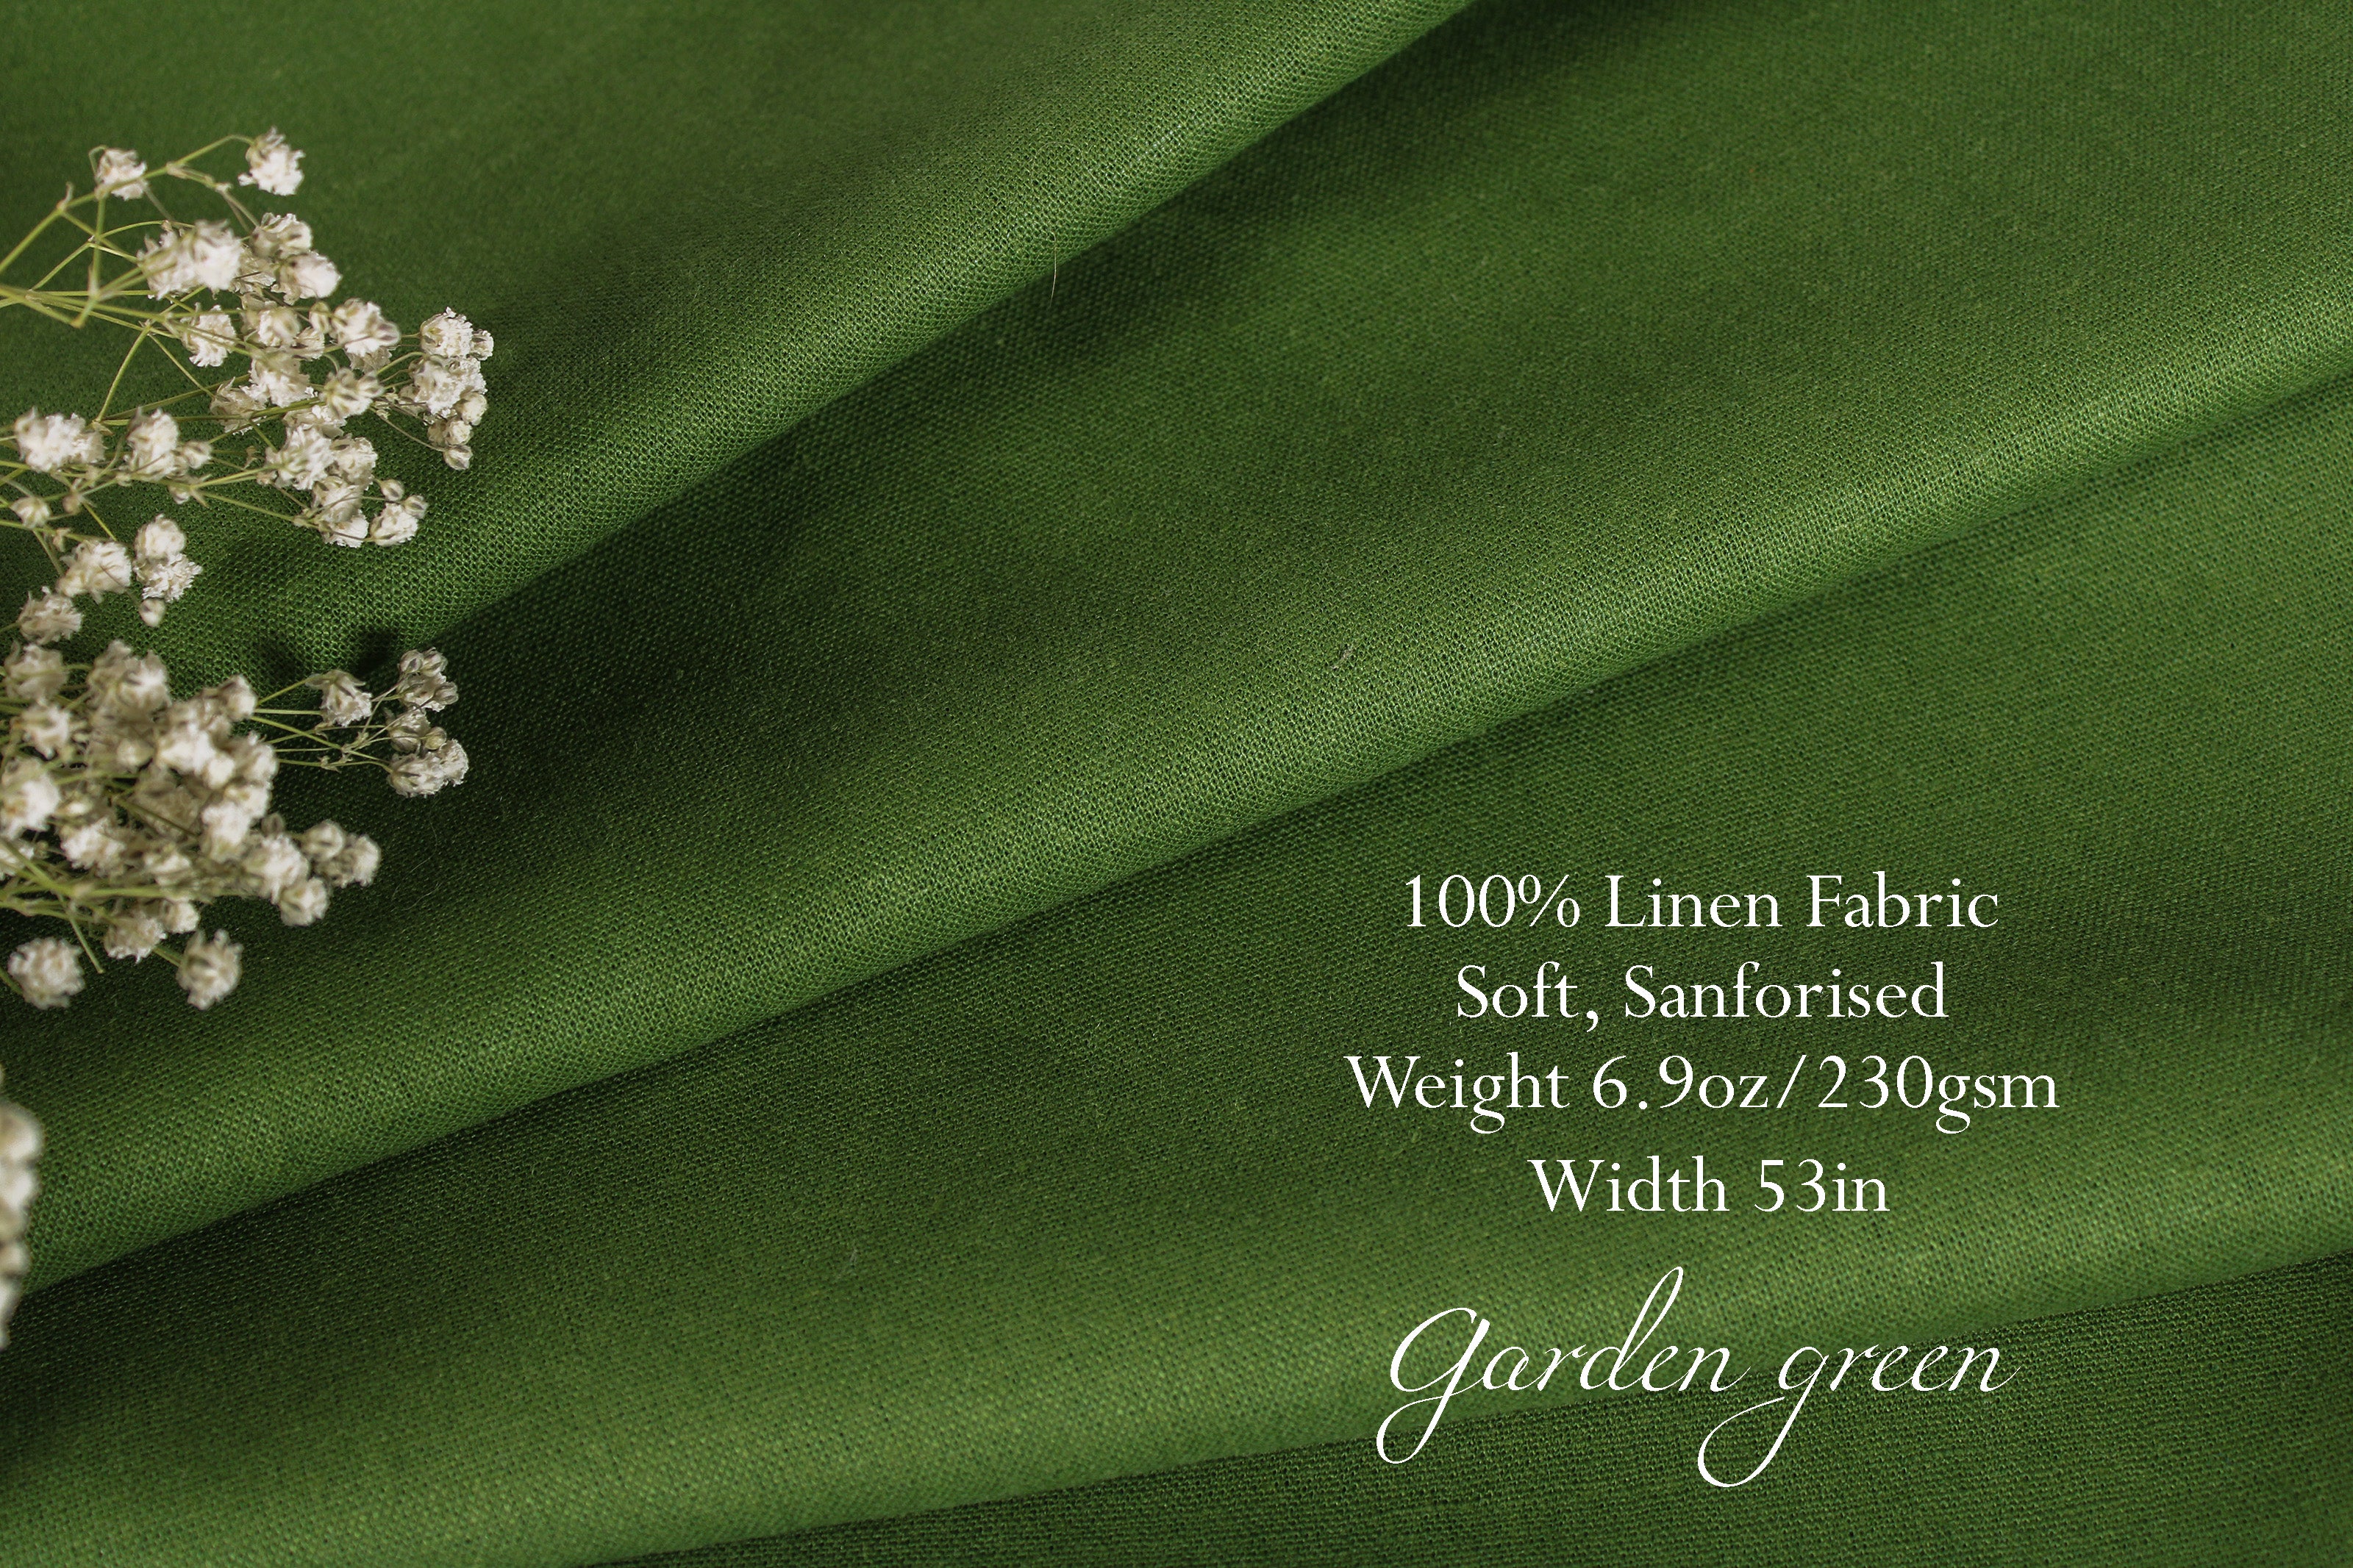 NEW LINEN FABRIC COLLECTION!!! / 100% Linen Fabric by the Yard / Garden green Linen Fabric / Buy Linen Online